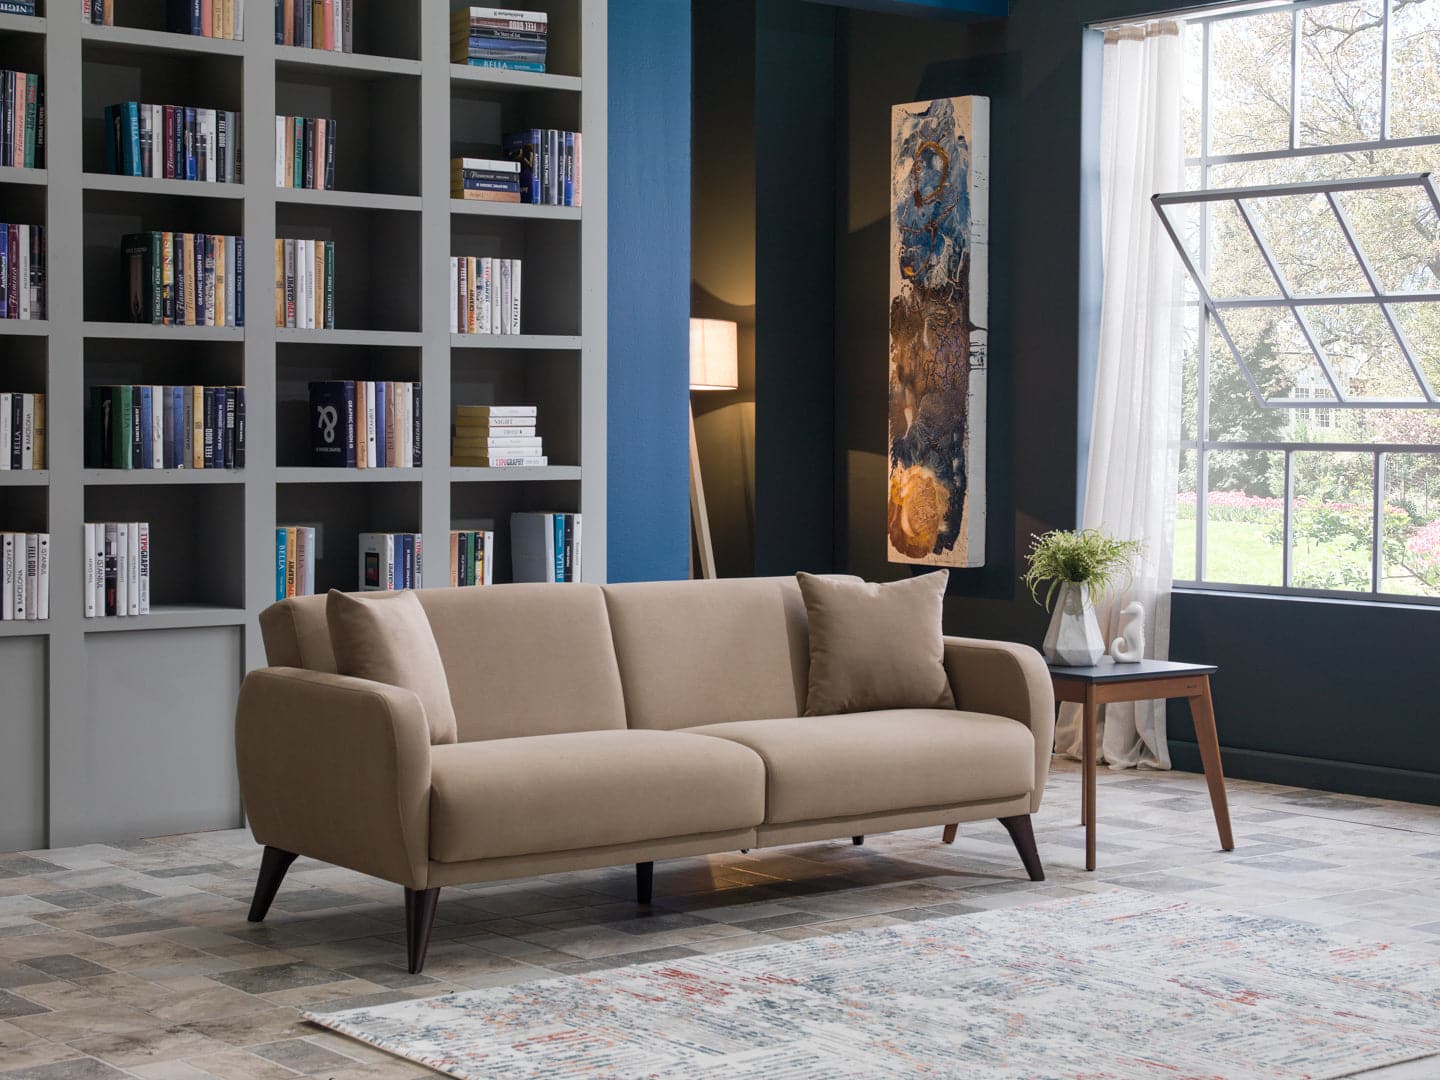 Flexy Sofa In A Box - Light Gray